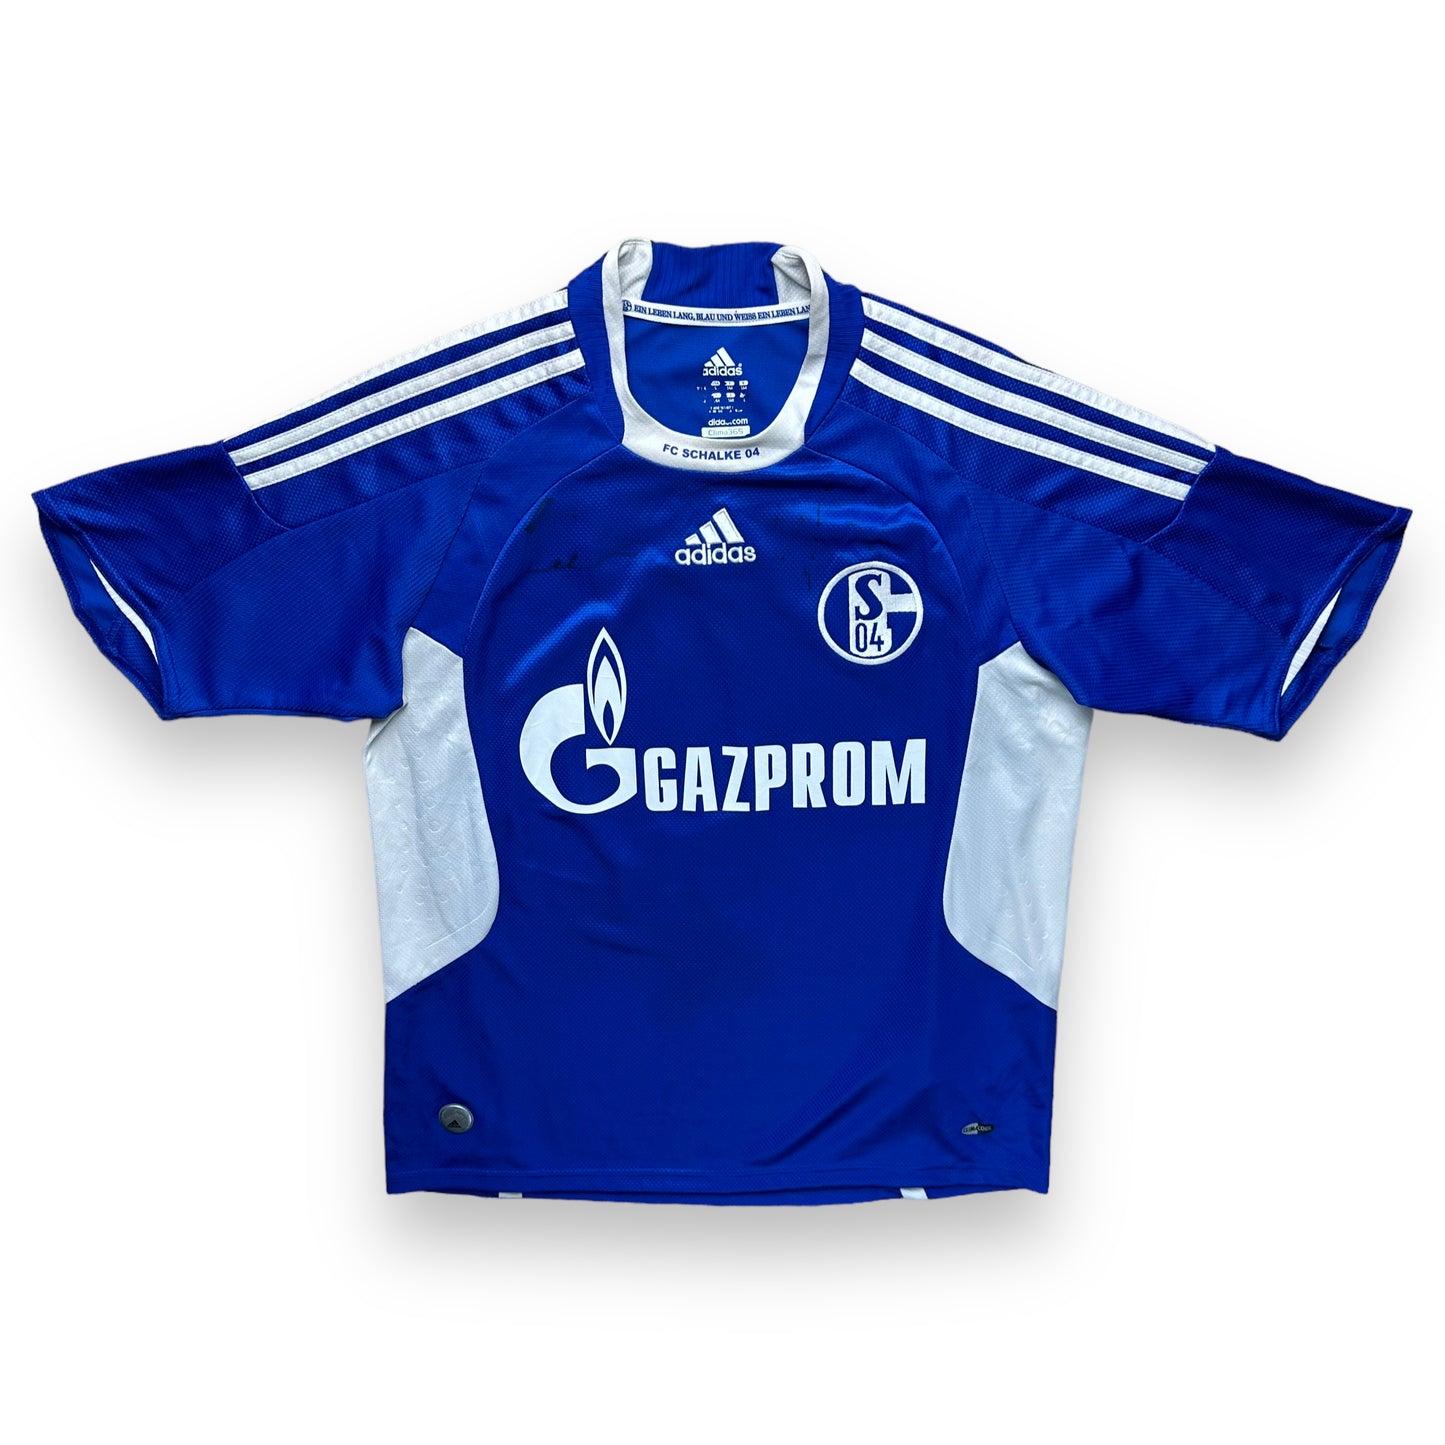 Schalke 2008-10 Home Shirt (Youth) Howedes #4